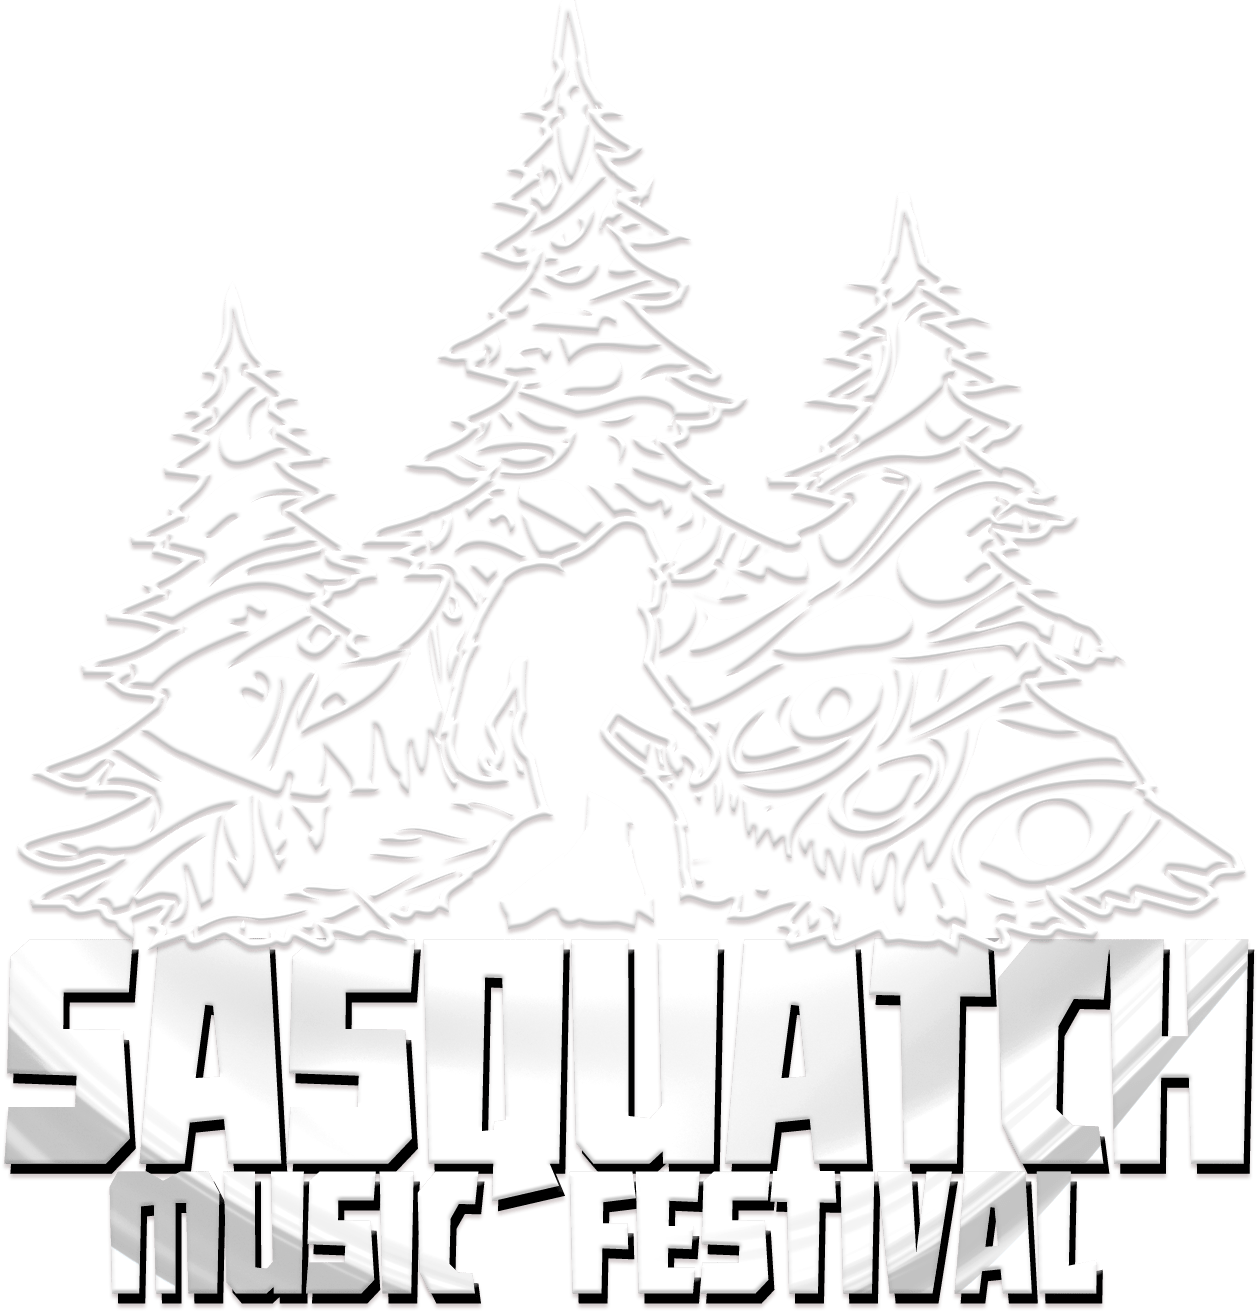 Sasquatch Music Festival